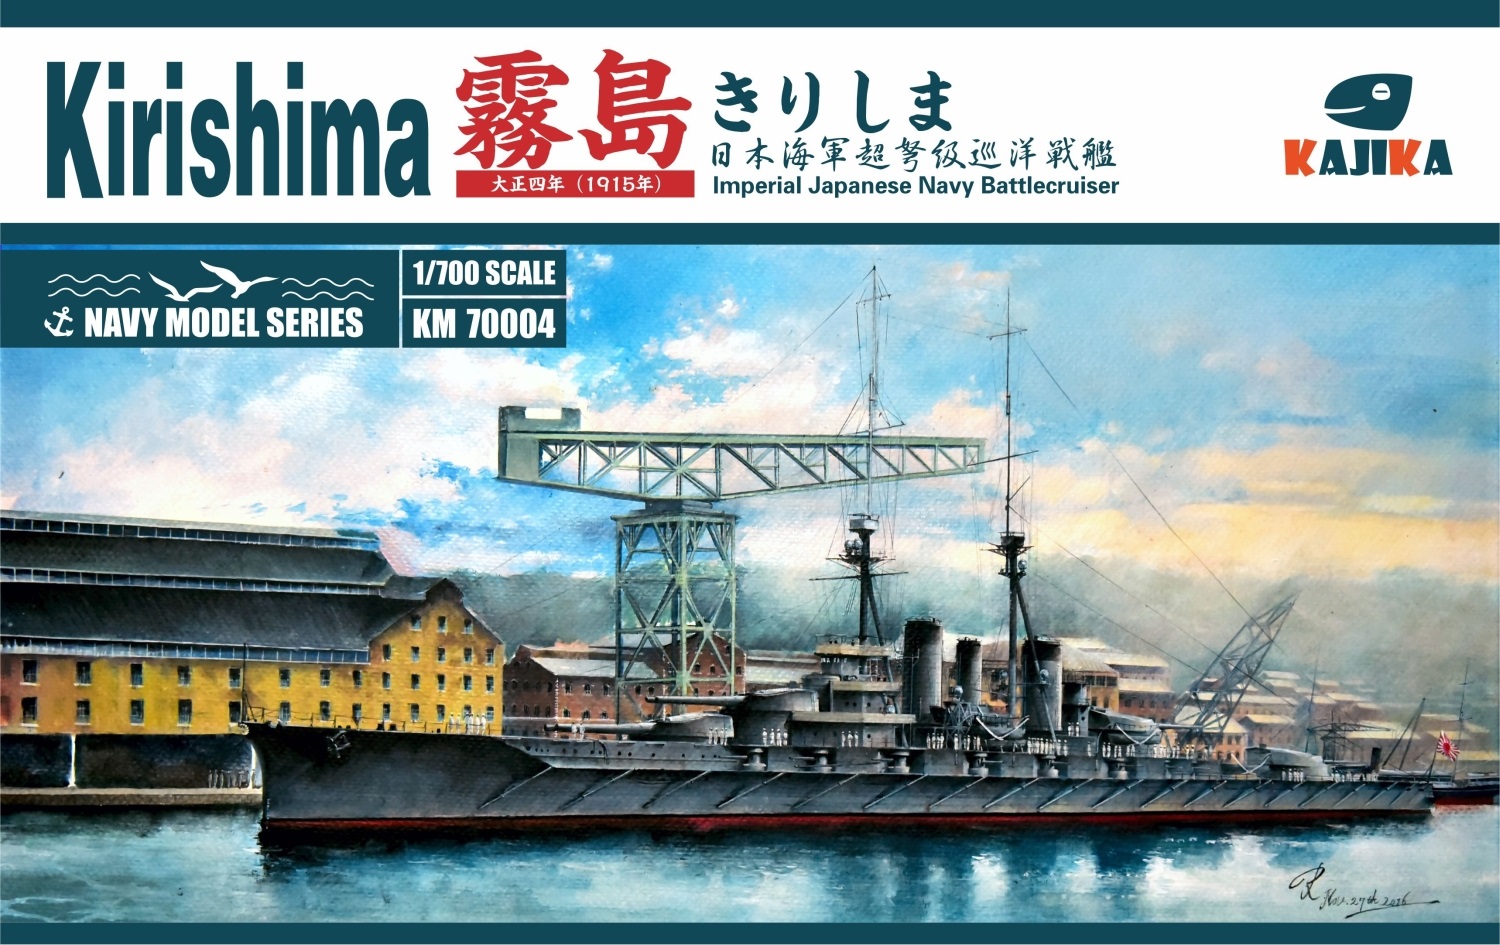 Imperial Japanese Navy Battlecruiser Kirishima 1915